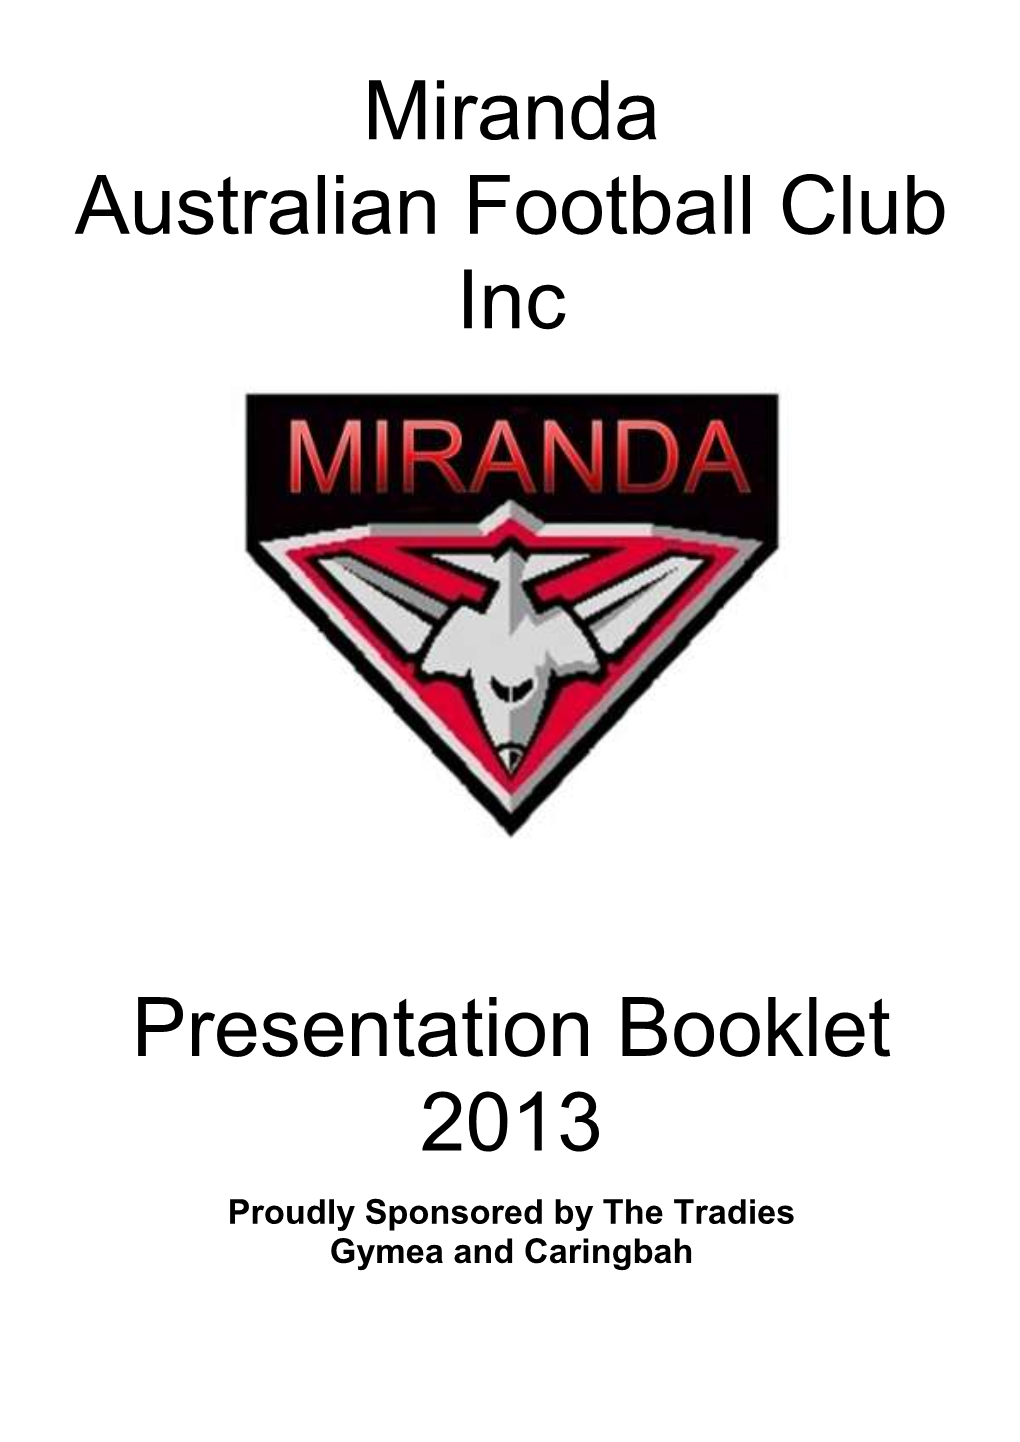 Miranda Australian Football Club Inc Presentation Booklet 2013